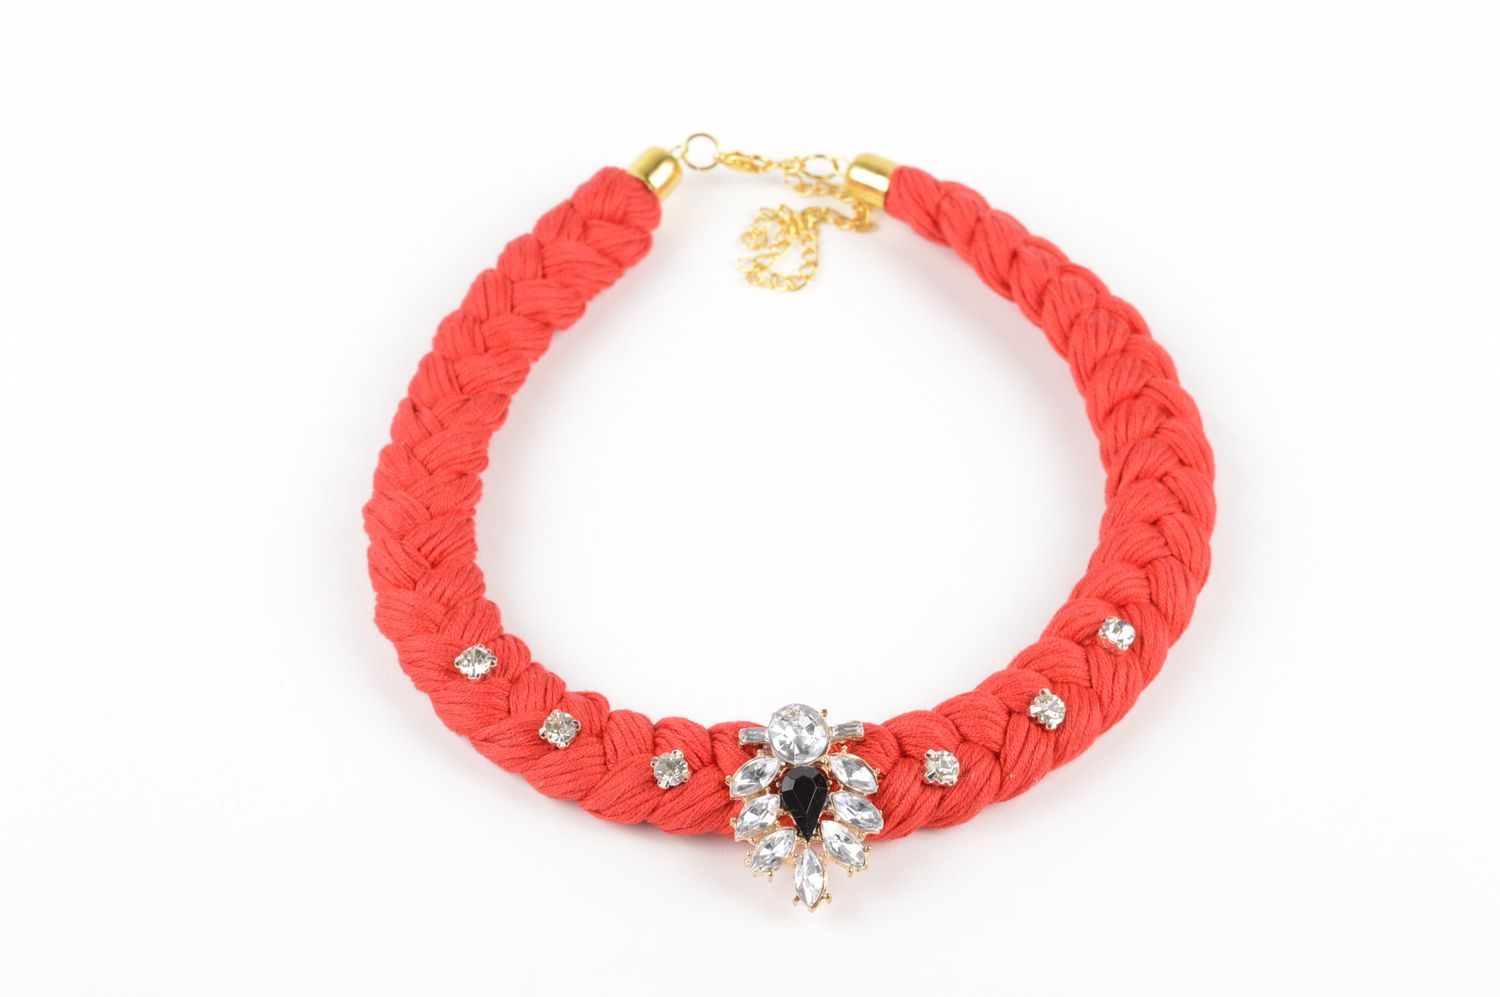 Handmade necklace fashion jewelry unusual accessory designer necklace gift ideas photo 2